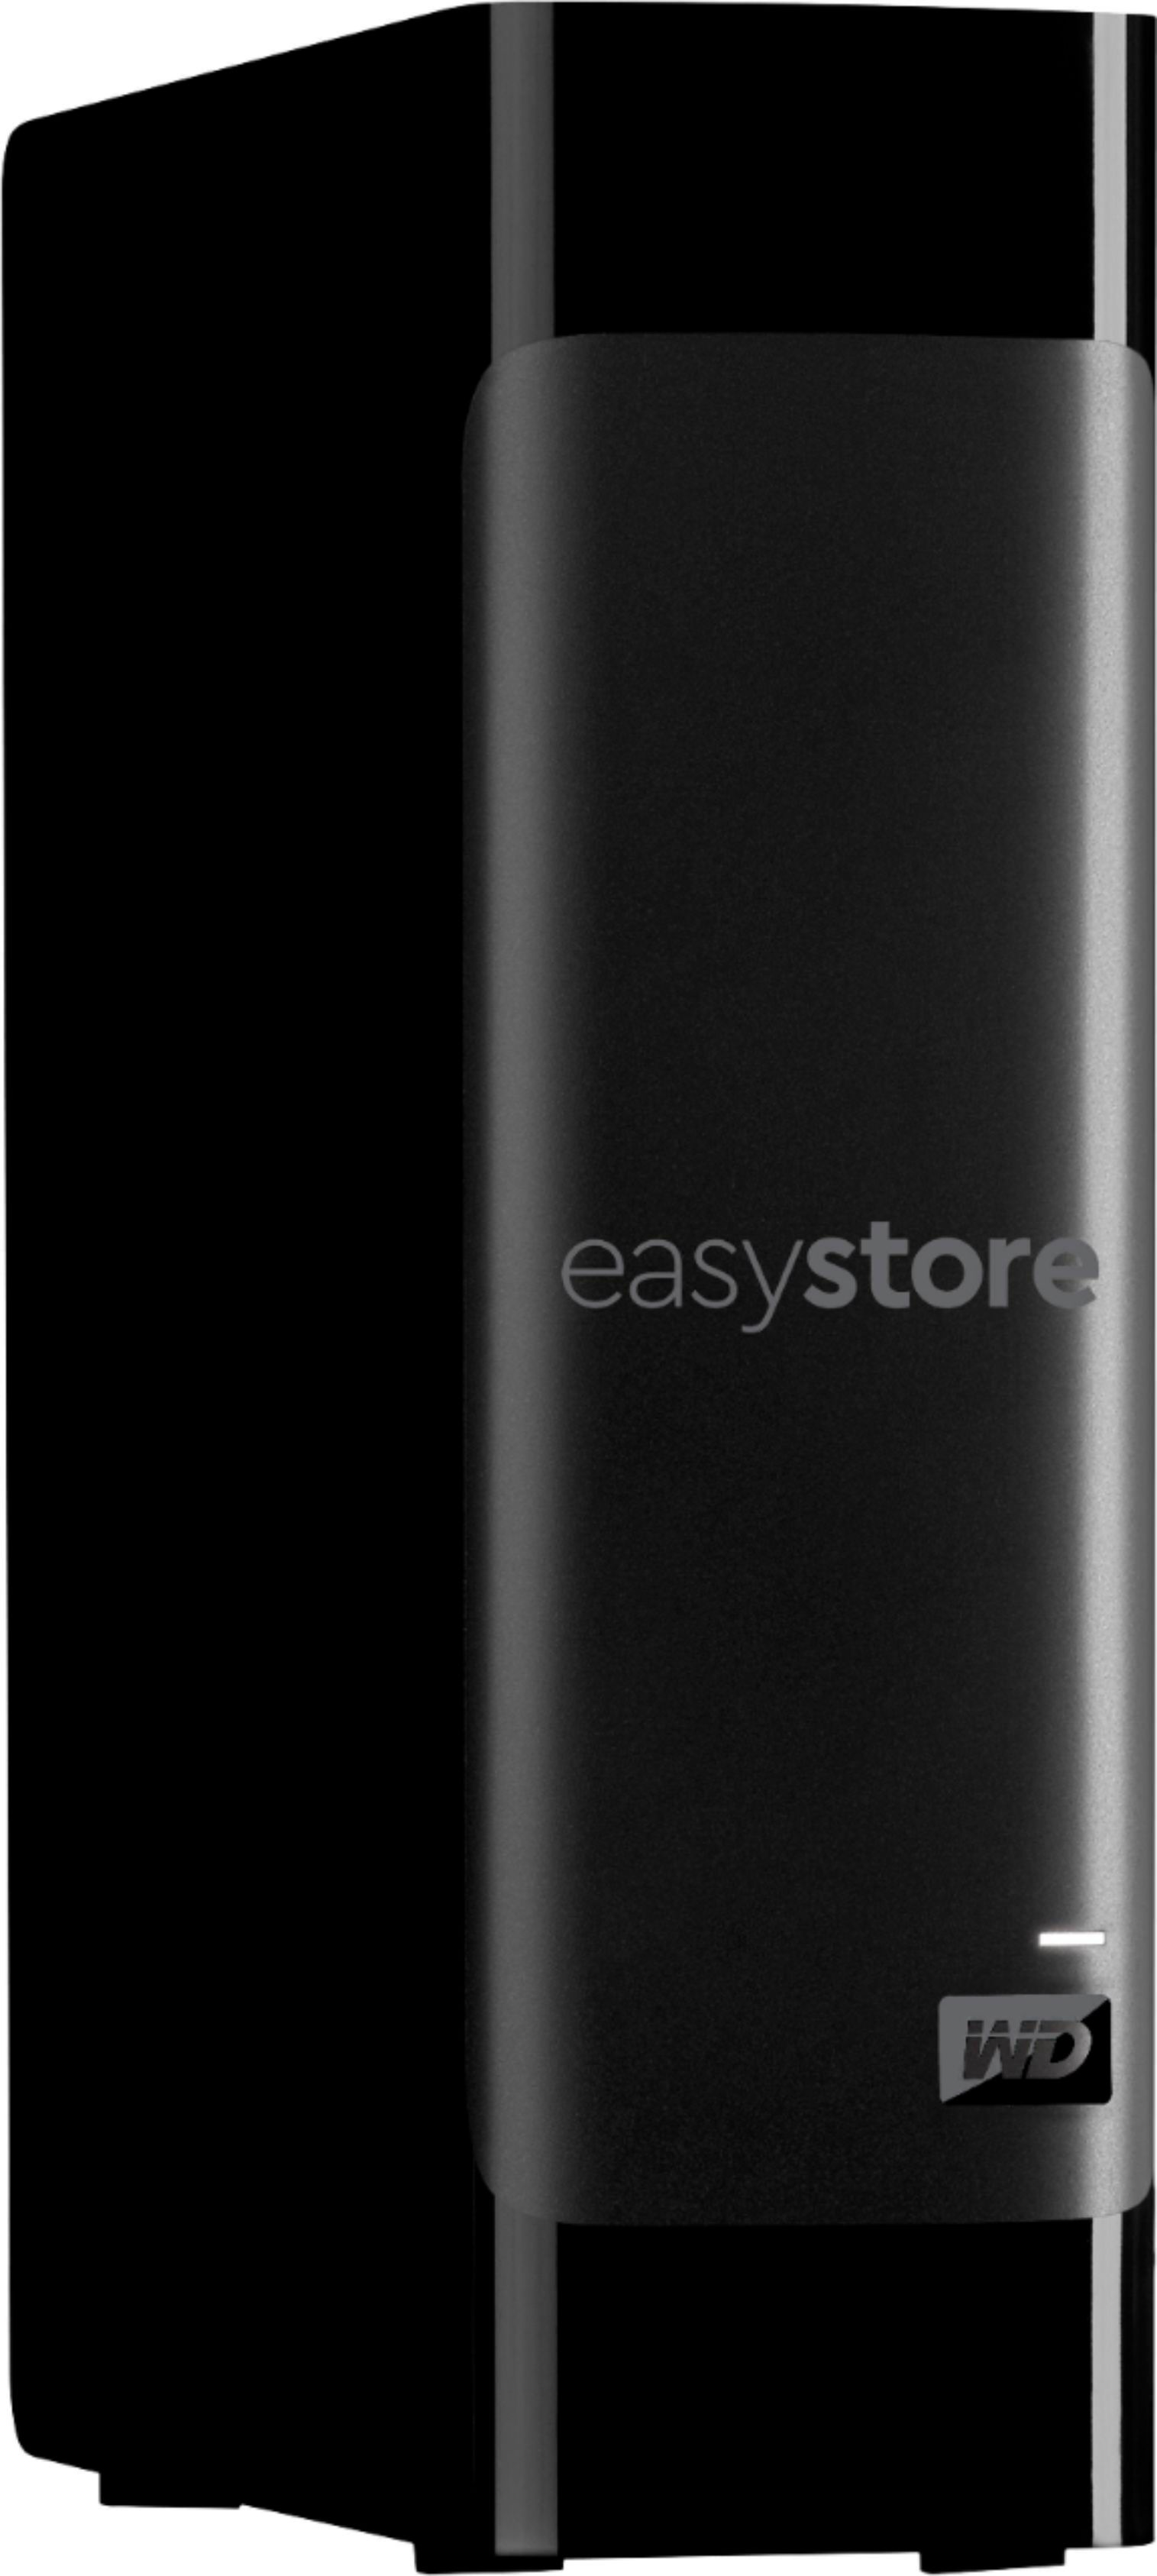 WD easystore 16TB External USB 3.0 Hard Drive Black WDBAMA0160HBK-NESN  Best Buy